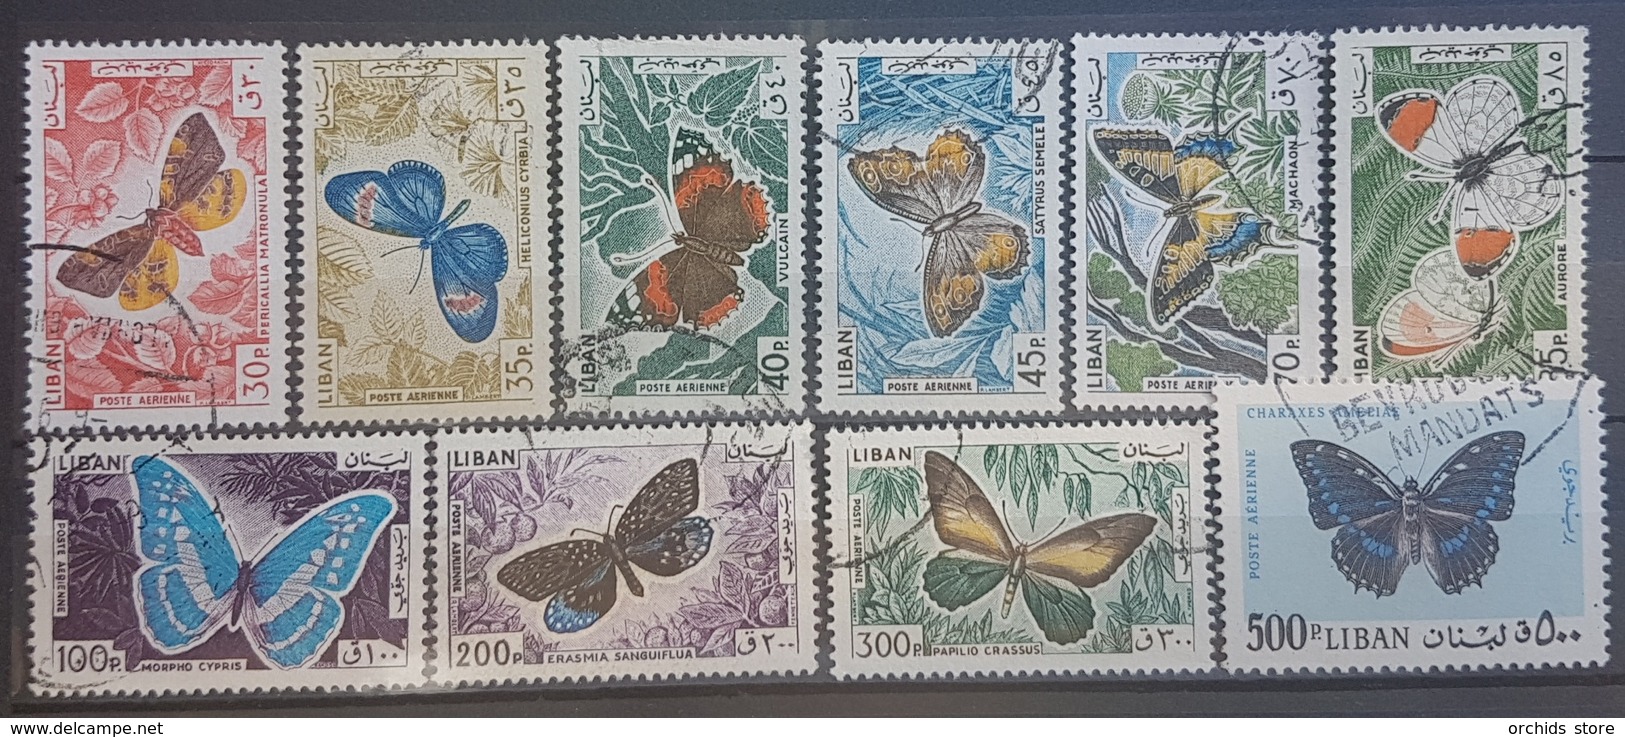 Lebanon 1965 Mi 900-909 Complete Set - Butterflies Issue - Butterfly - Lebanon